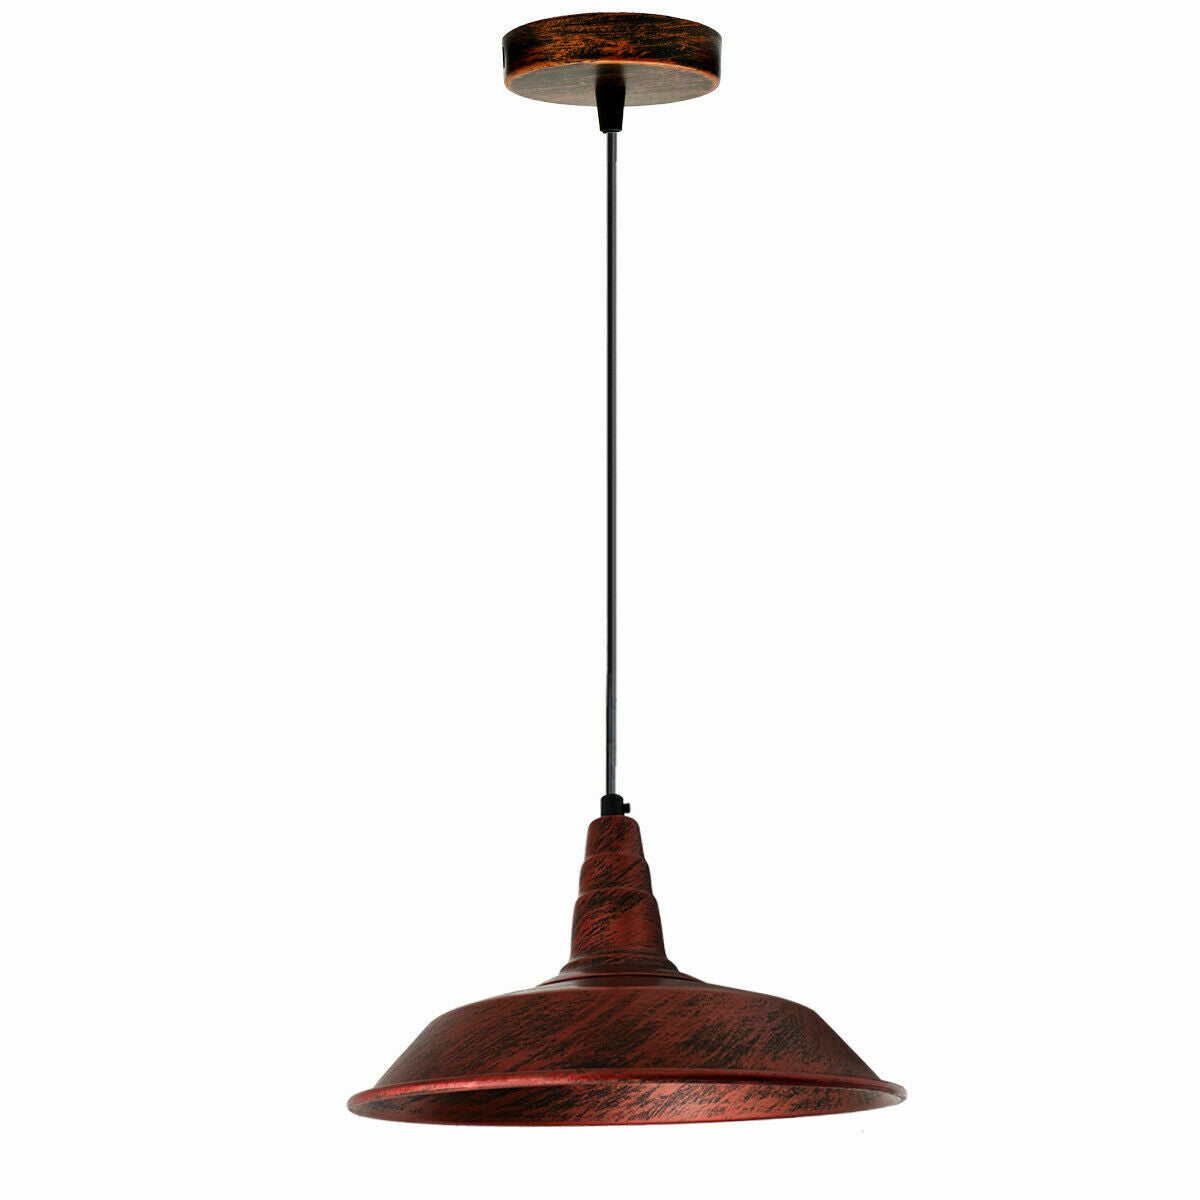 Industrial Vintage New Pendant Ceiling Light 26cm Bowl Shade Rustic Red E27 Uk Holder~3724 - LEDSone UK Ltd